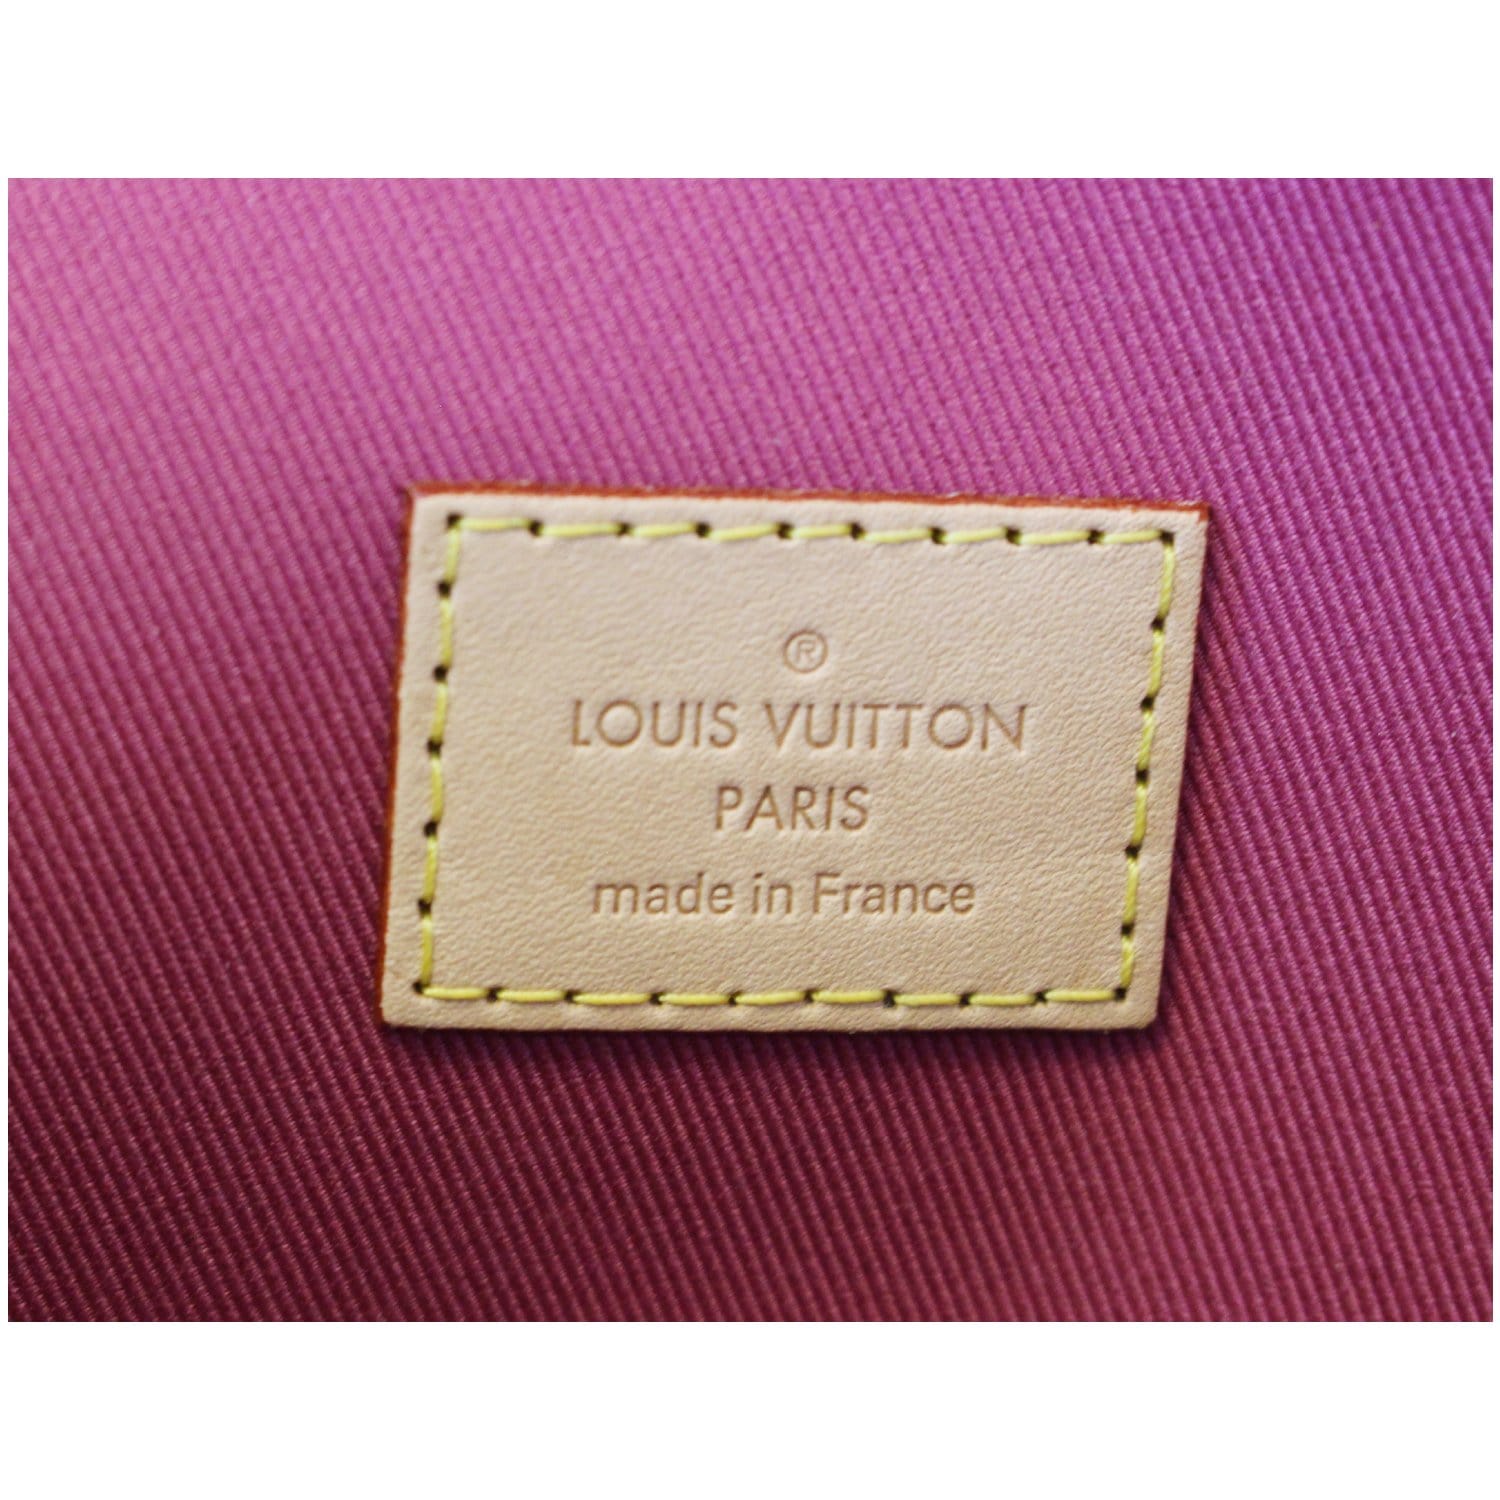 Louis Vuitton - Monogram Canvas Cluny Bb NM